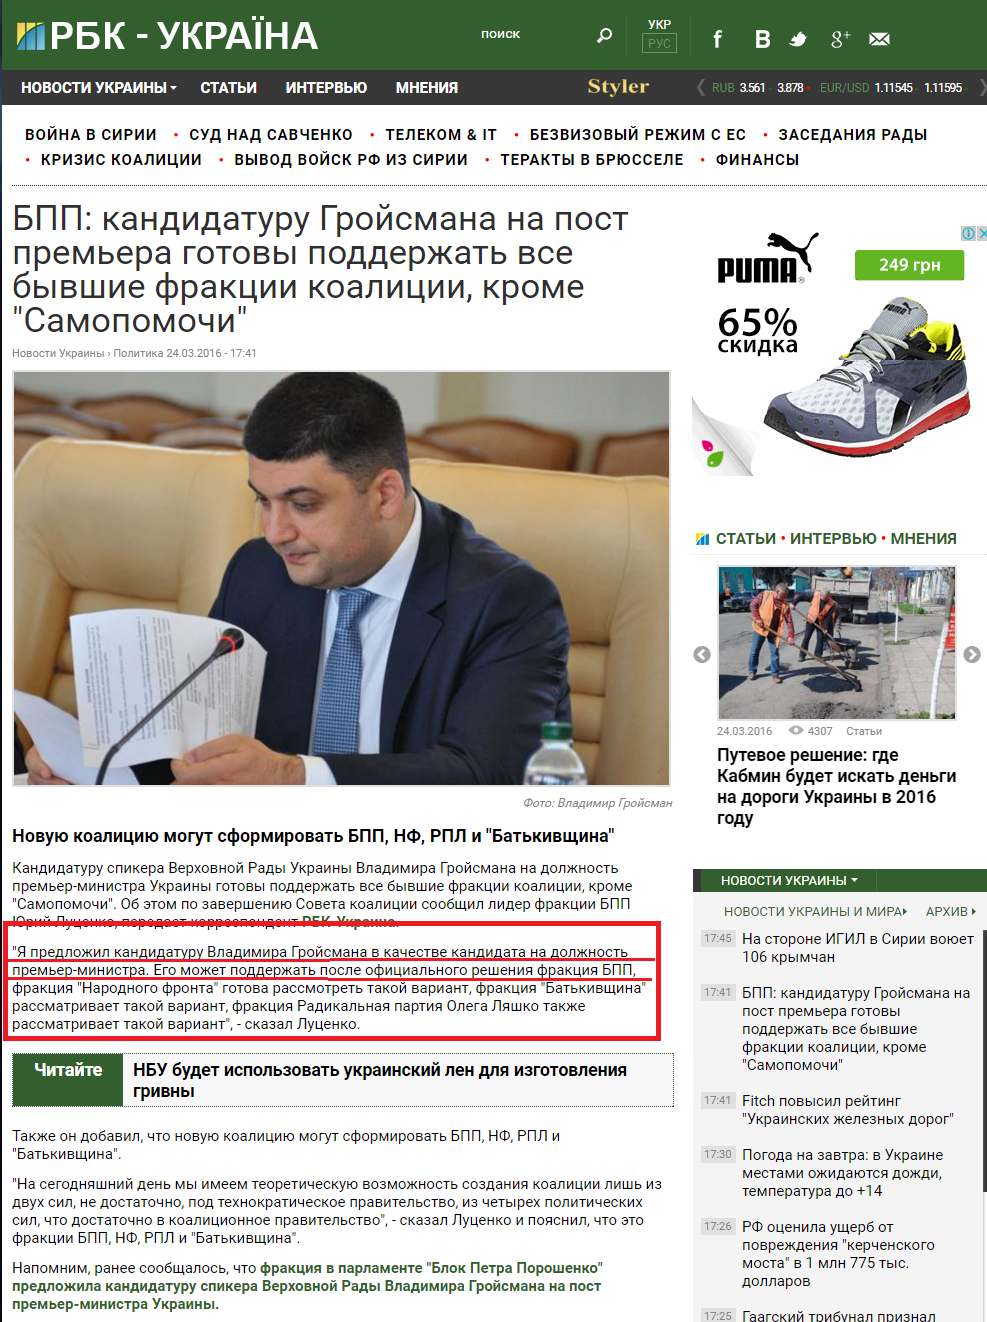 https://www.rbc.ua/rus/news/bpp-kandidaturu-groysmana-post-premera-gotovy-1458834062.html